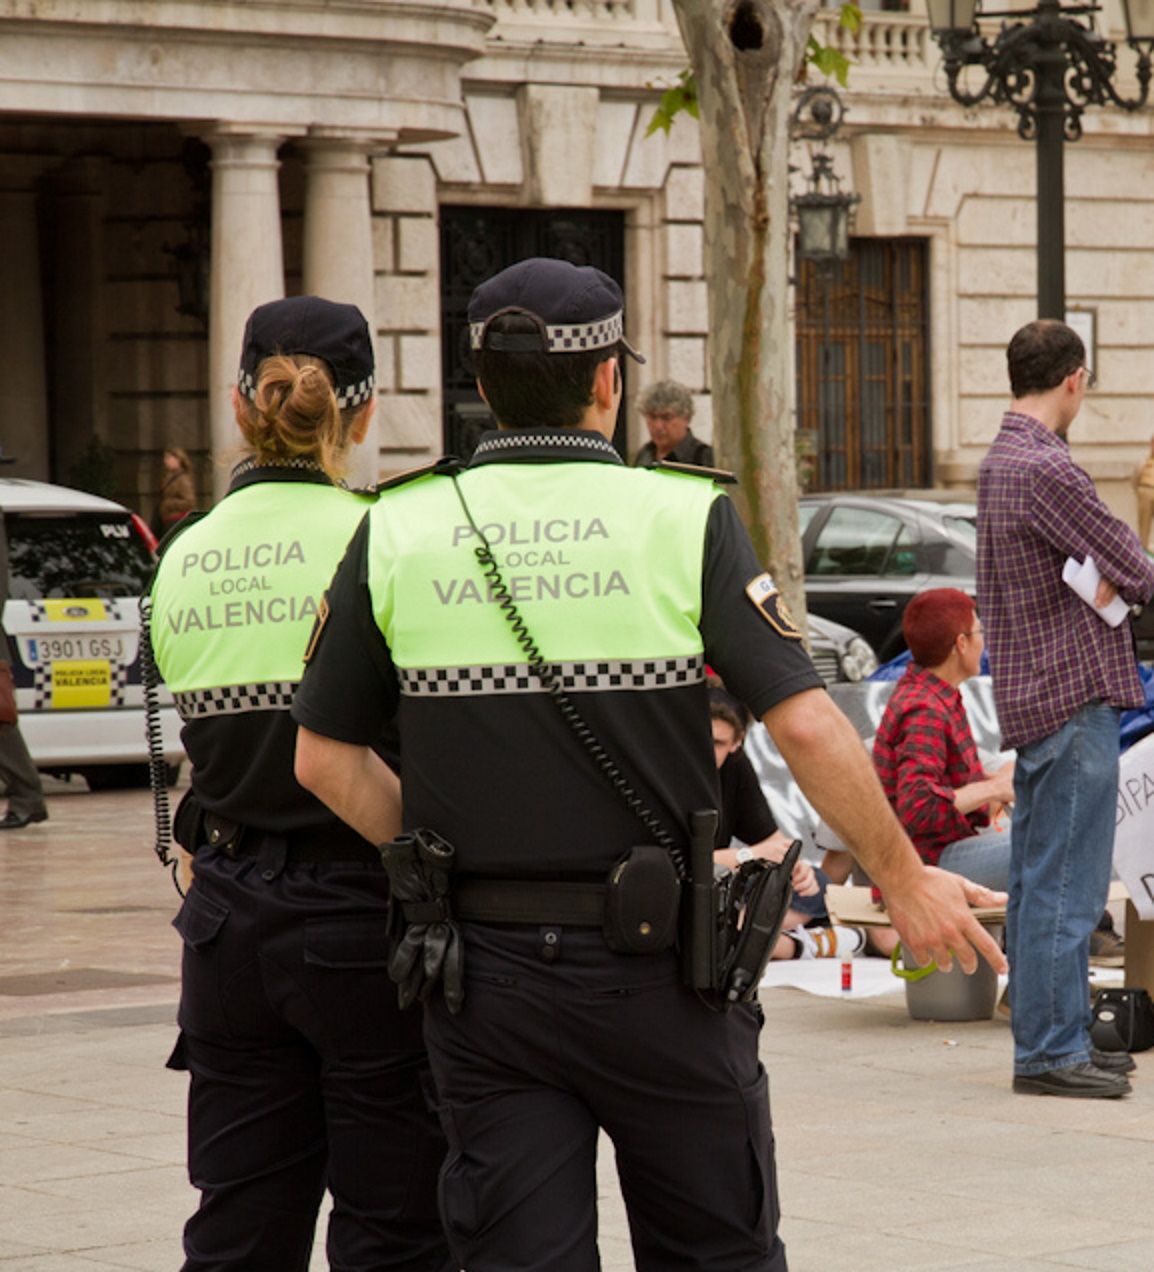 Policía Valencia / Adolfo Senabre - Wikimedia Commons